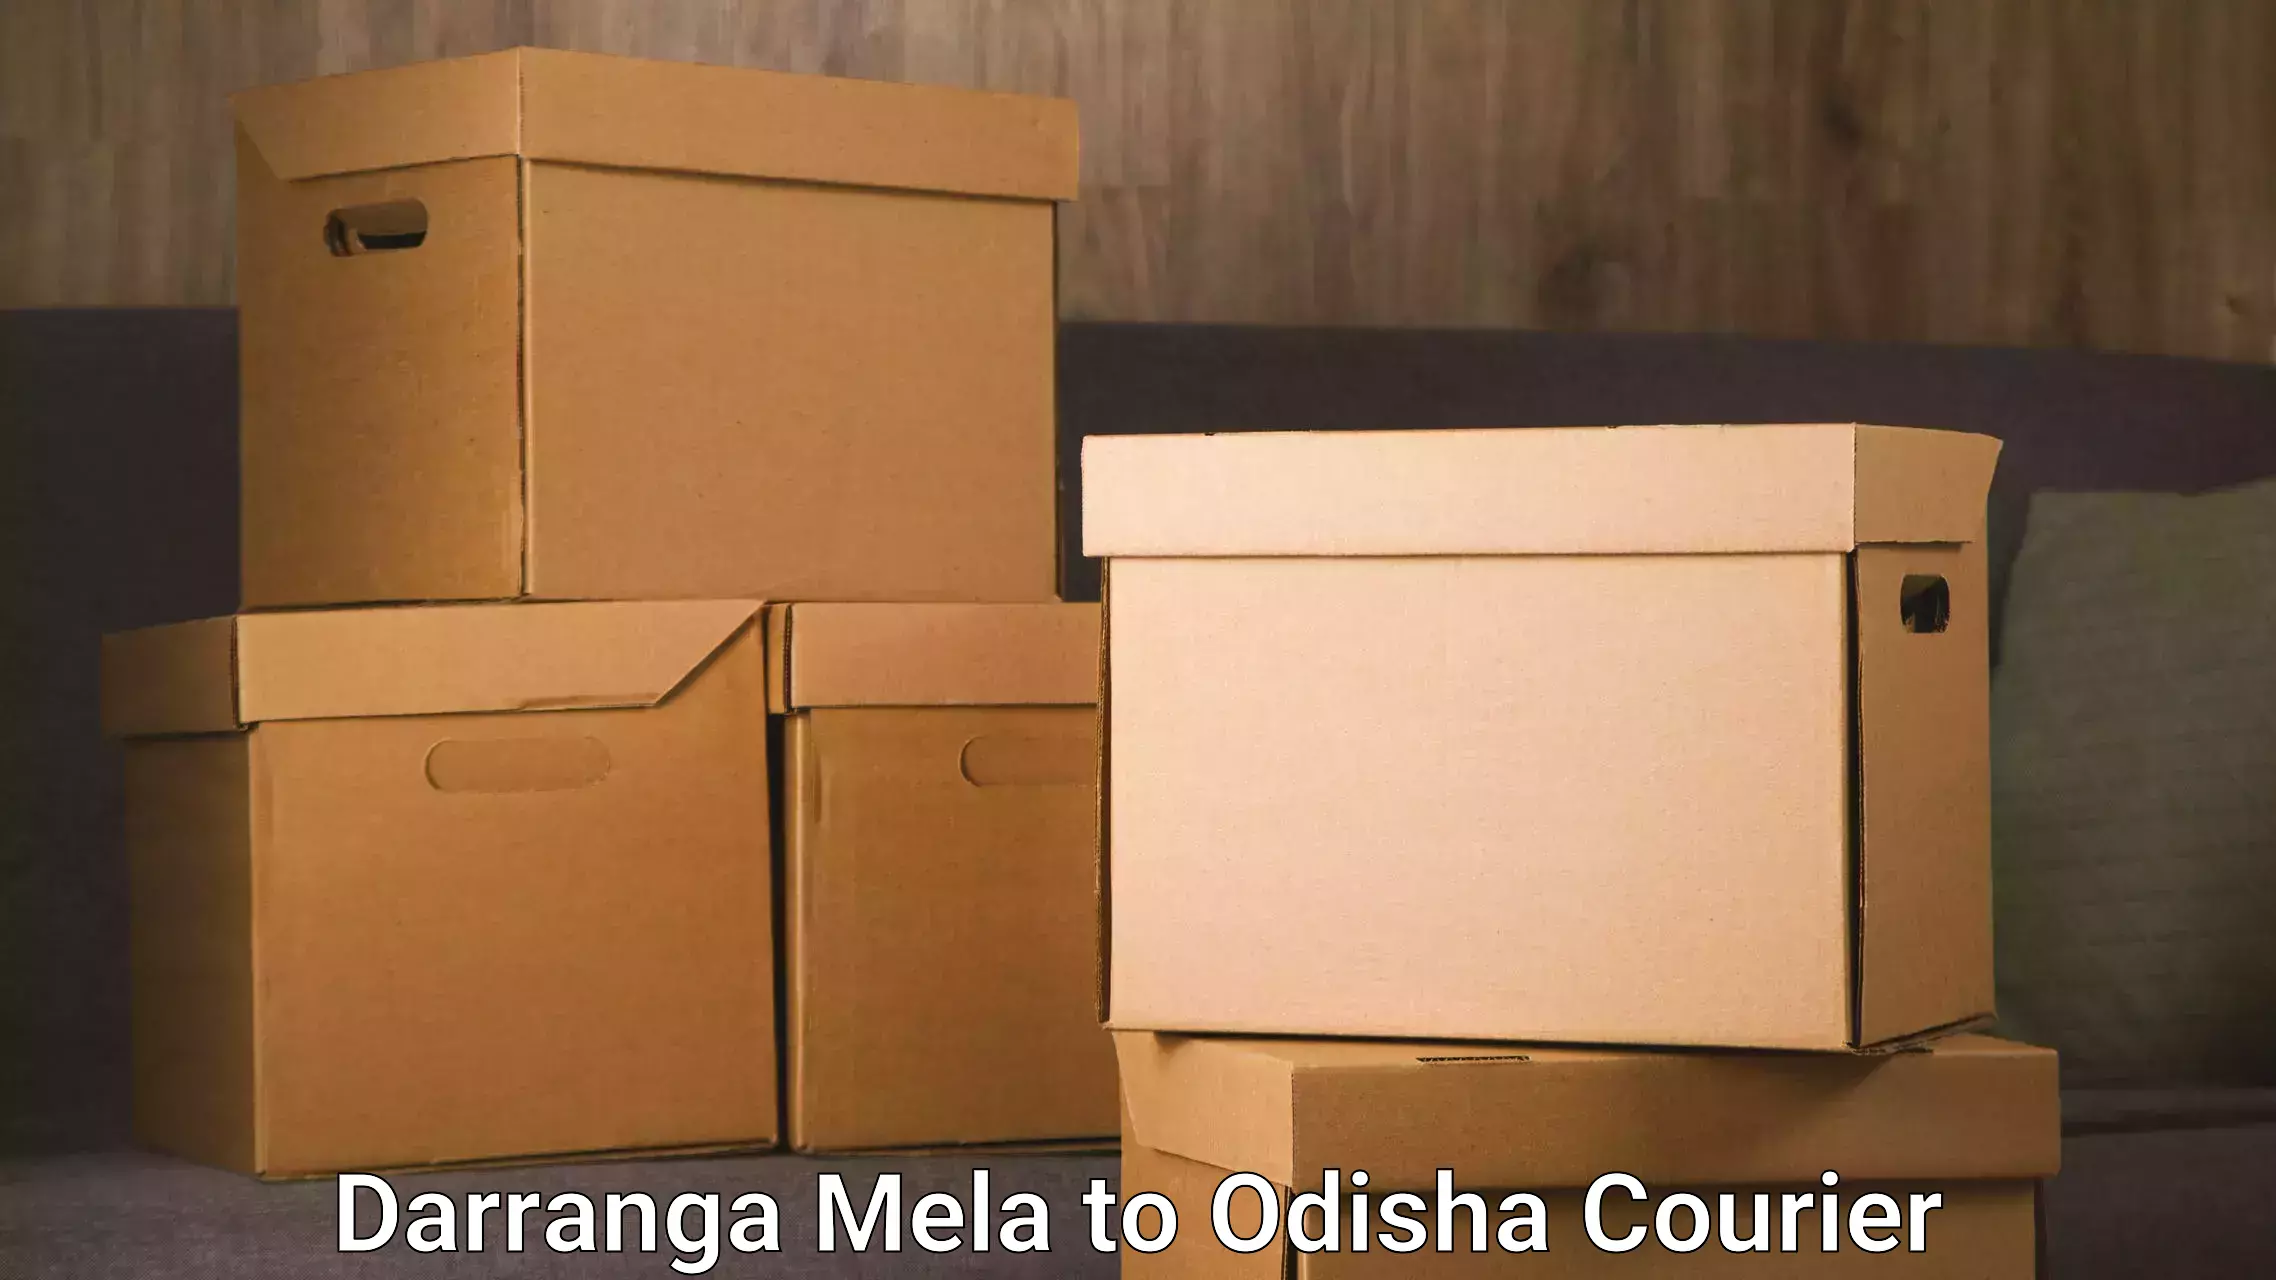 Express delivery network Darranga Mela to Sundergarh